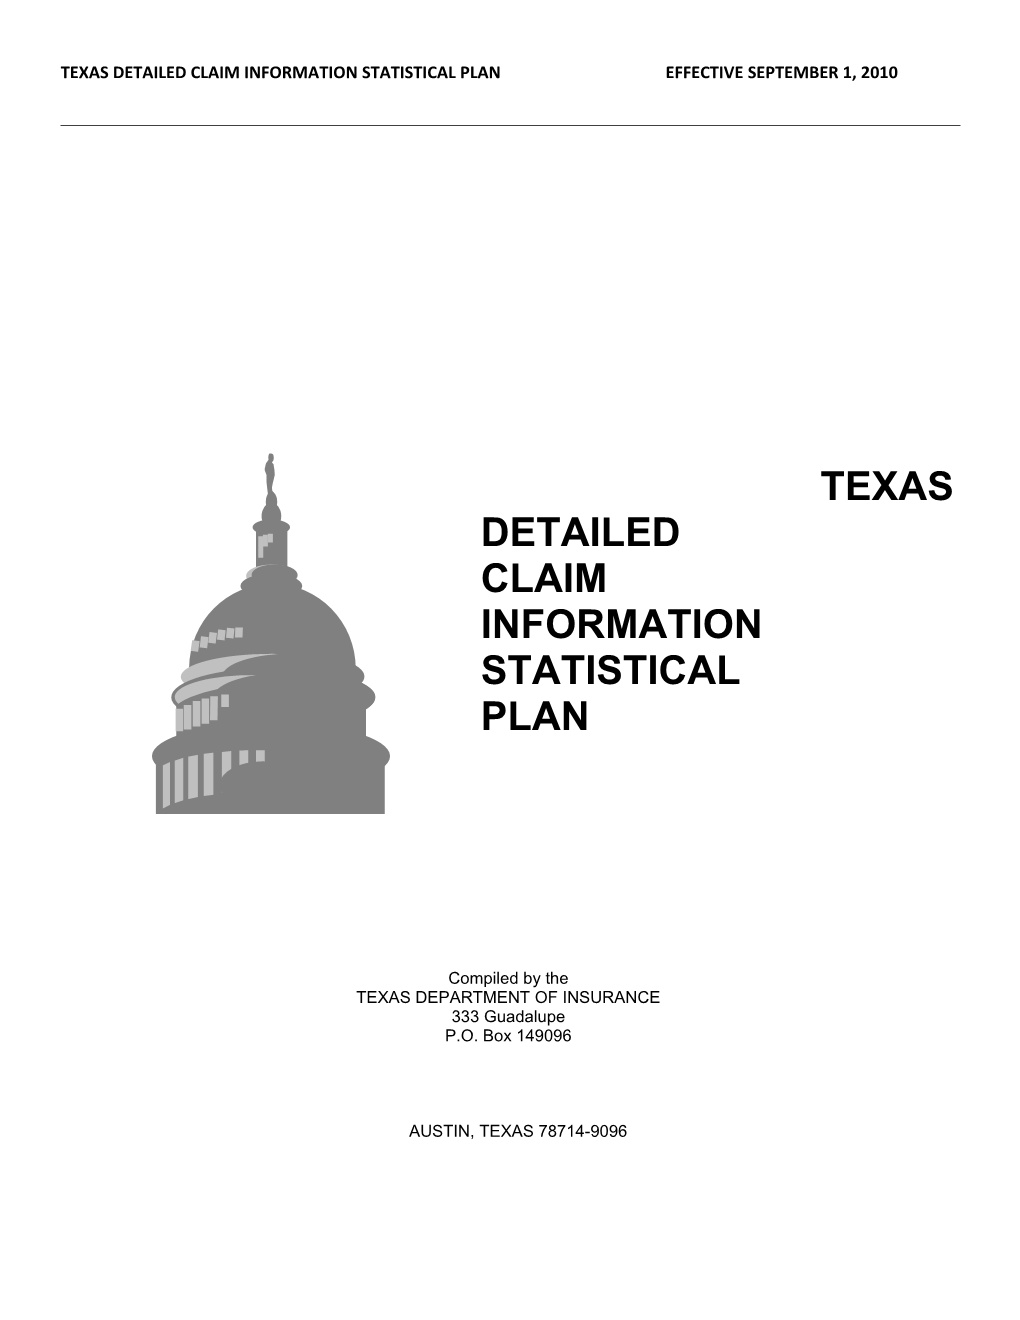 Texas Detailed Claim Information Statistical Plan Effective September 1, 2010